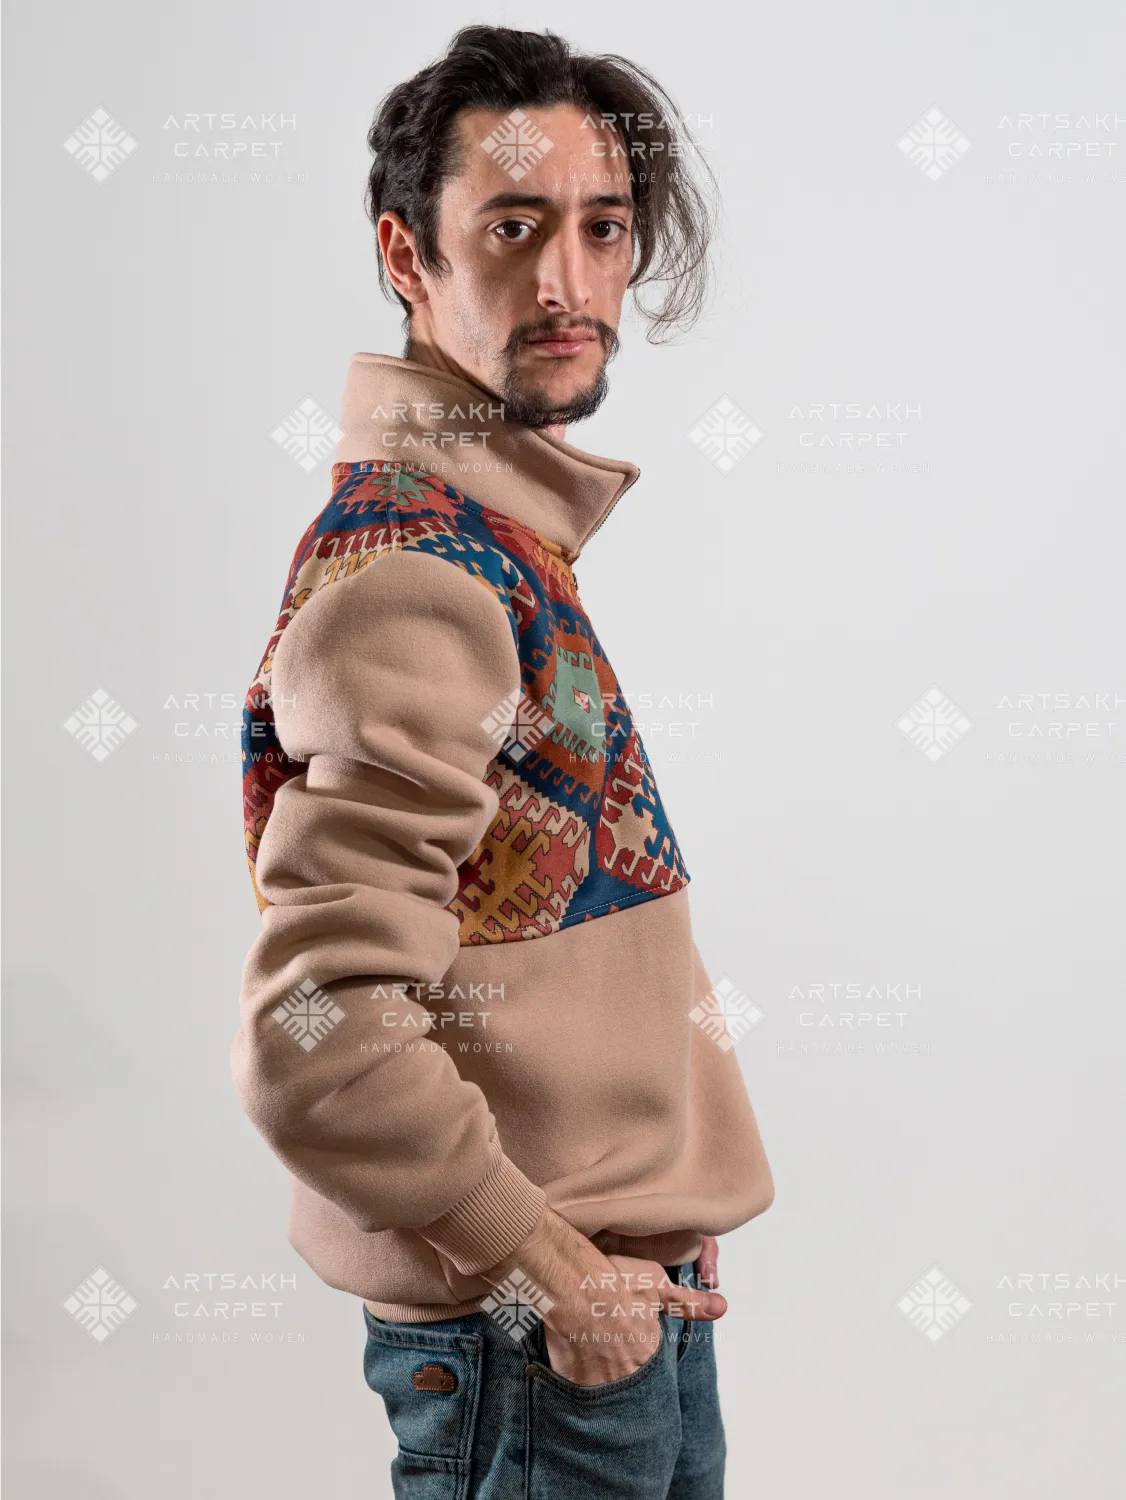 Armenian ornamental sweater